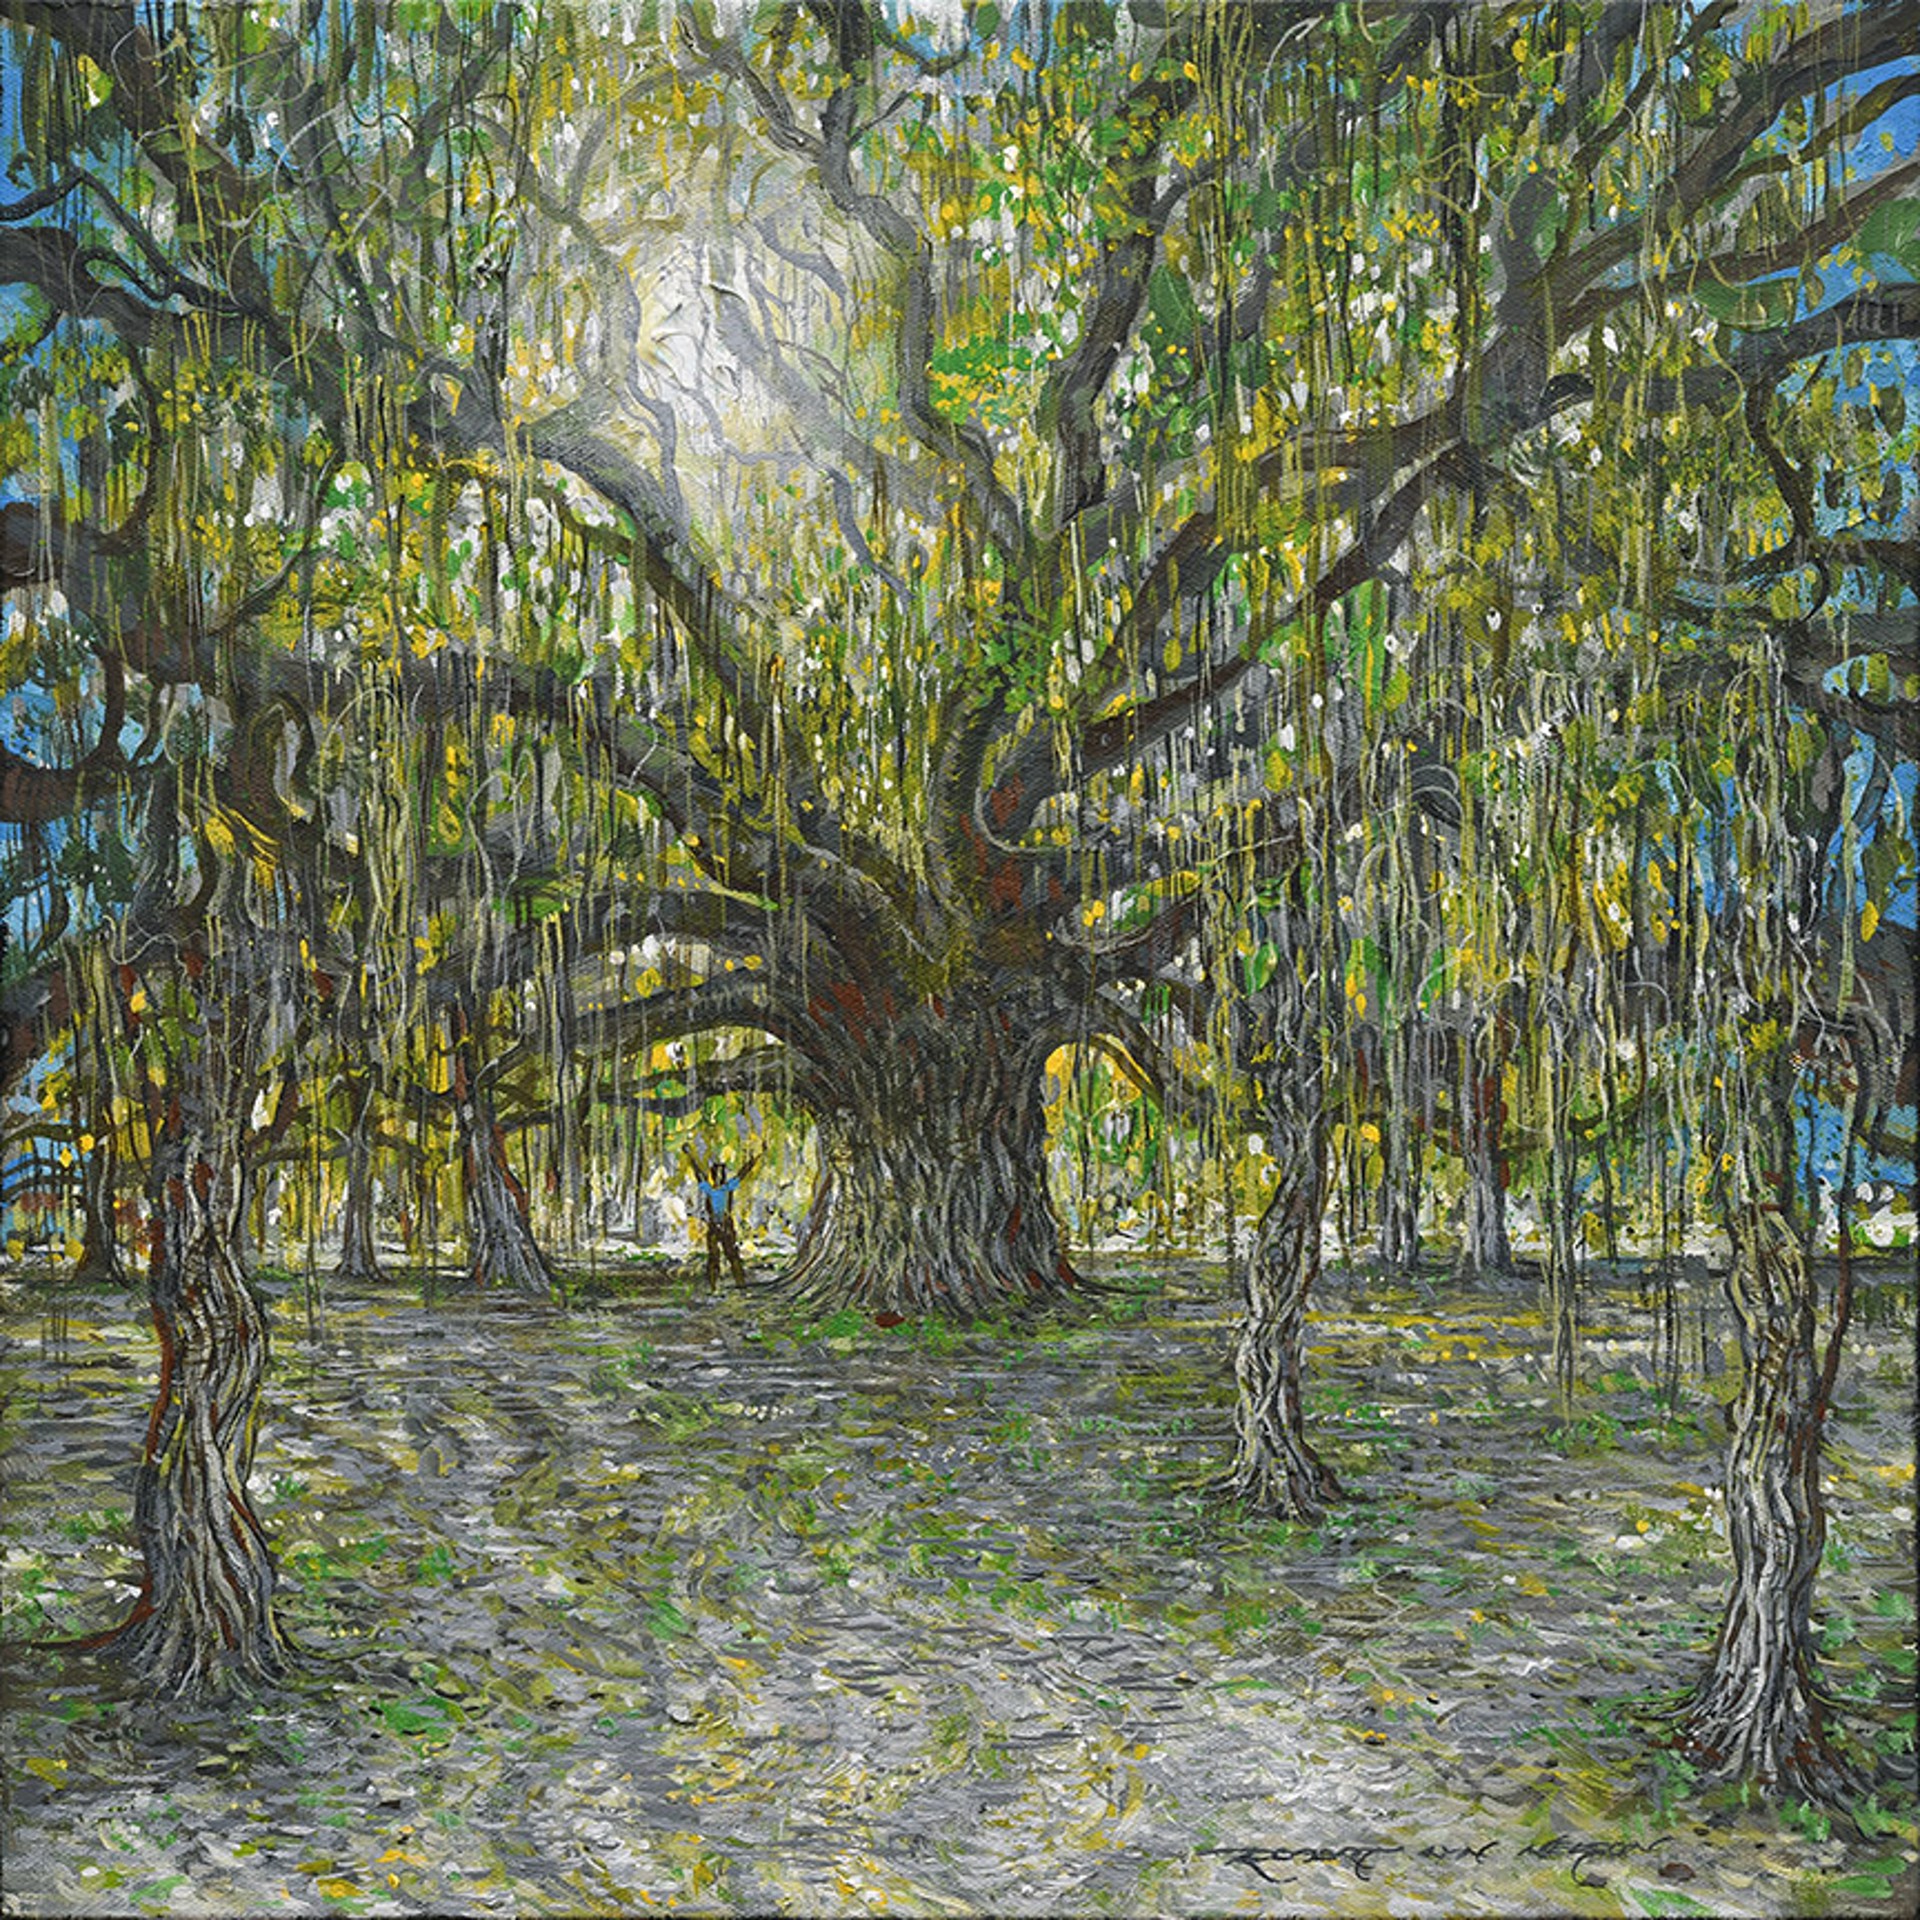 Life Renewed (Banyan Tree) by Robert Lyn Nelson